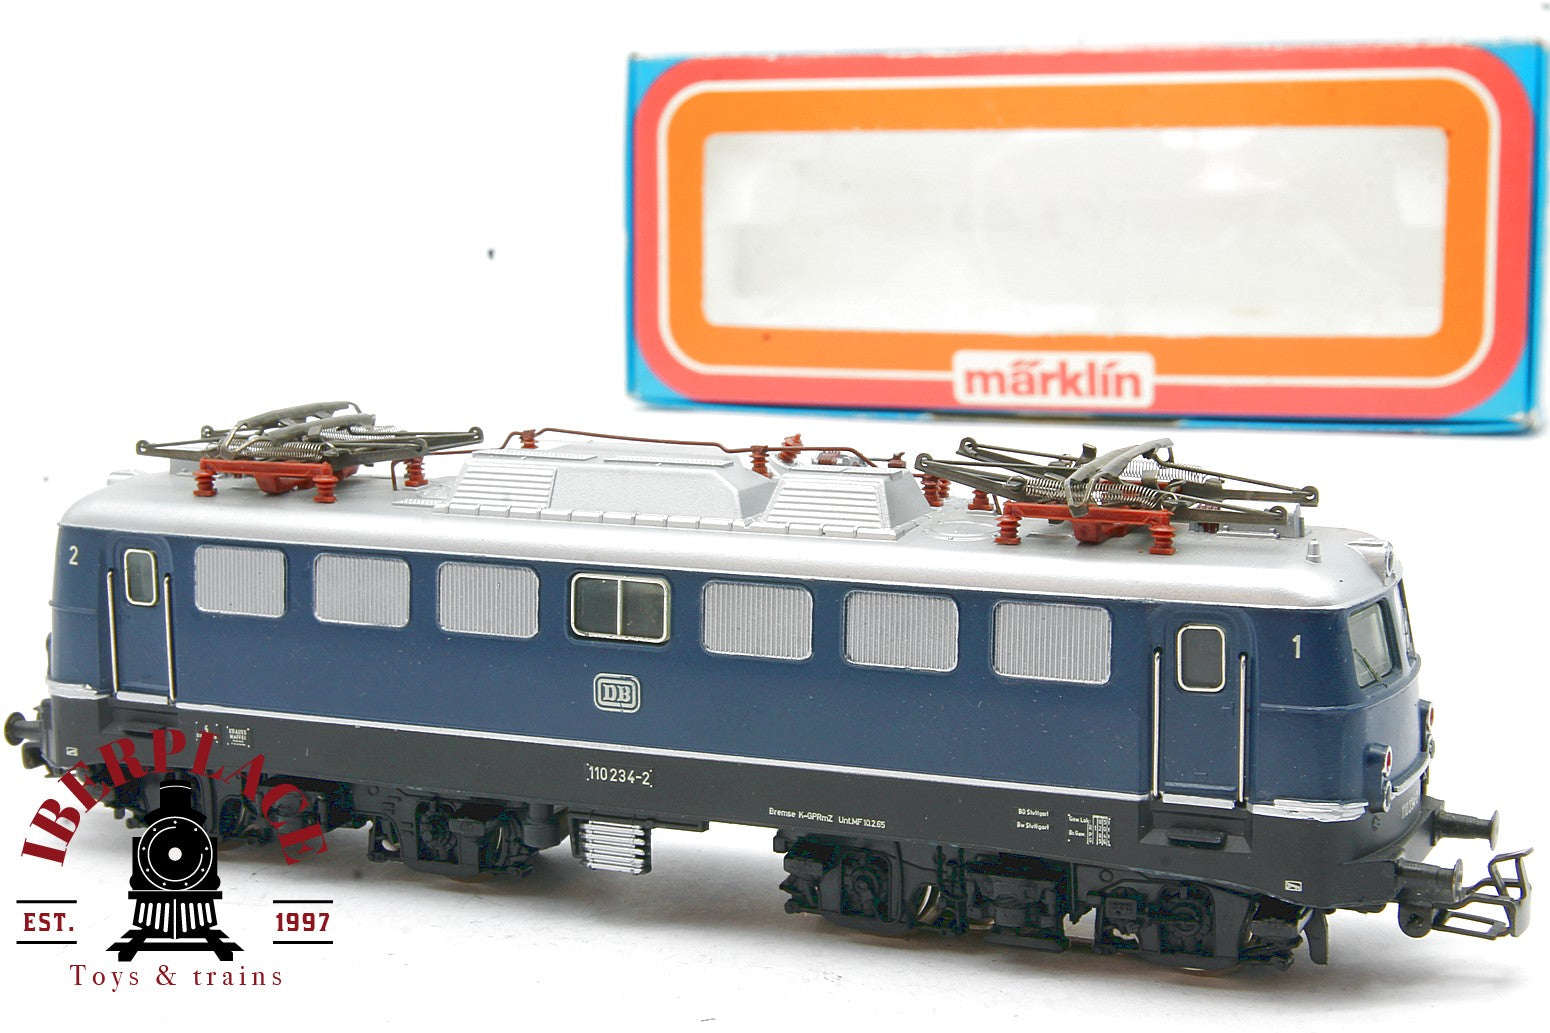 Märklin 3039 locomotora eléctrica DB 110 234-2 escala H0 1:87 ho 00